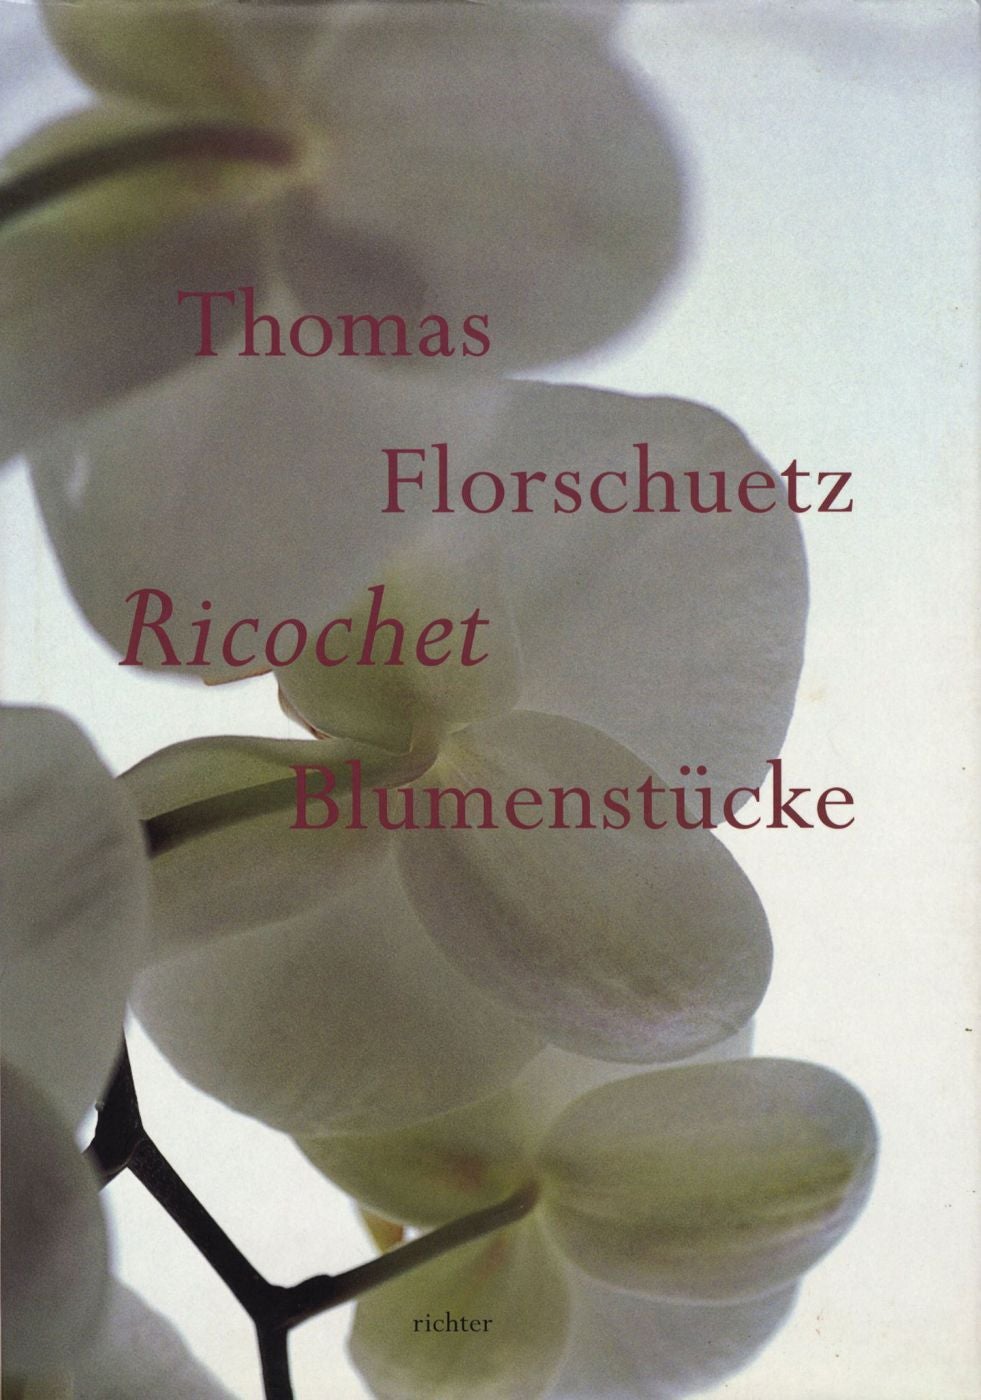 Thomas Florschuetz: Ricochet - Blumenstücke (Flower Parts)